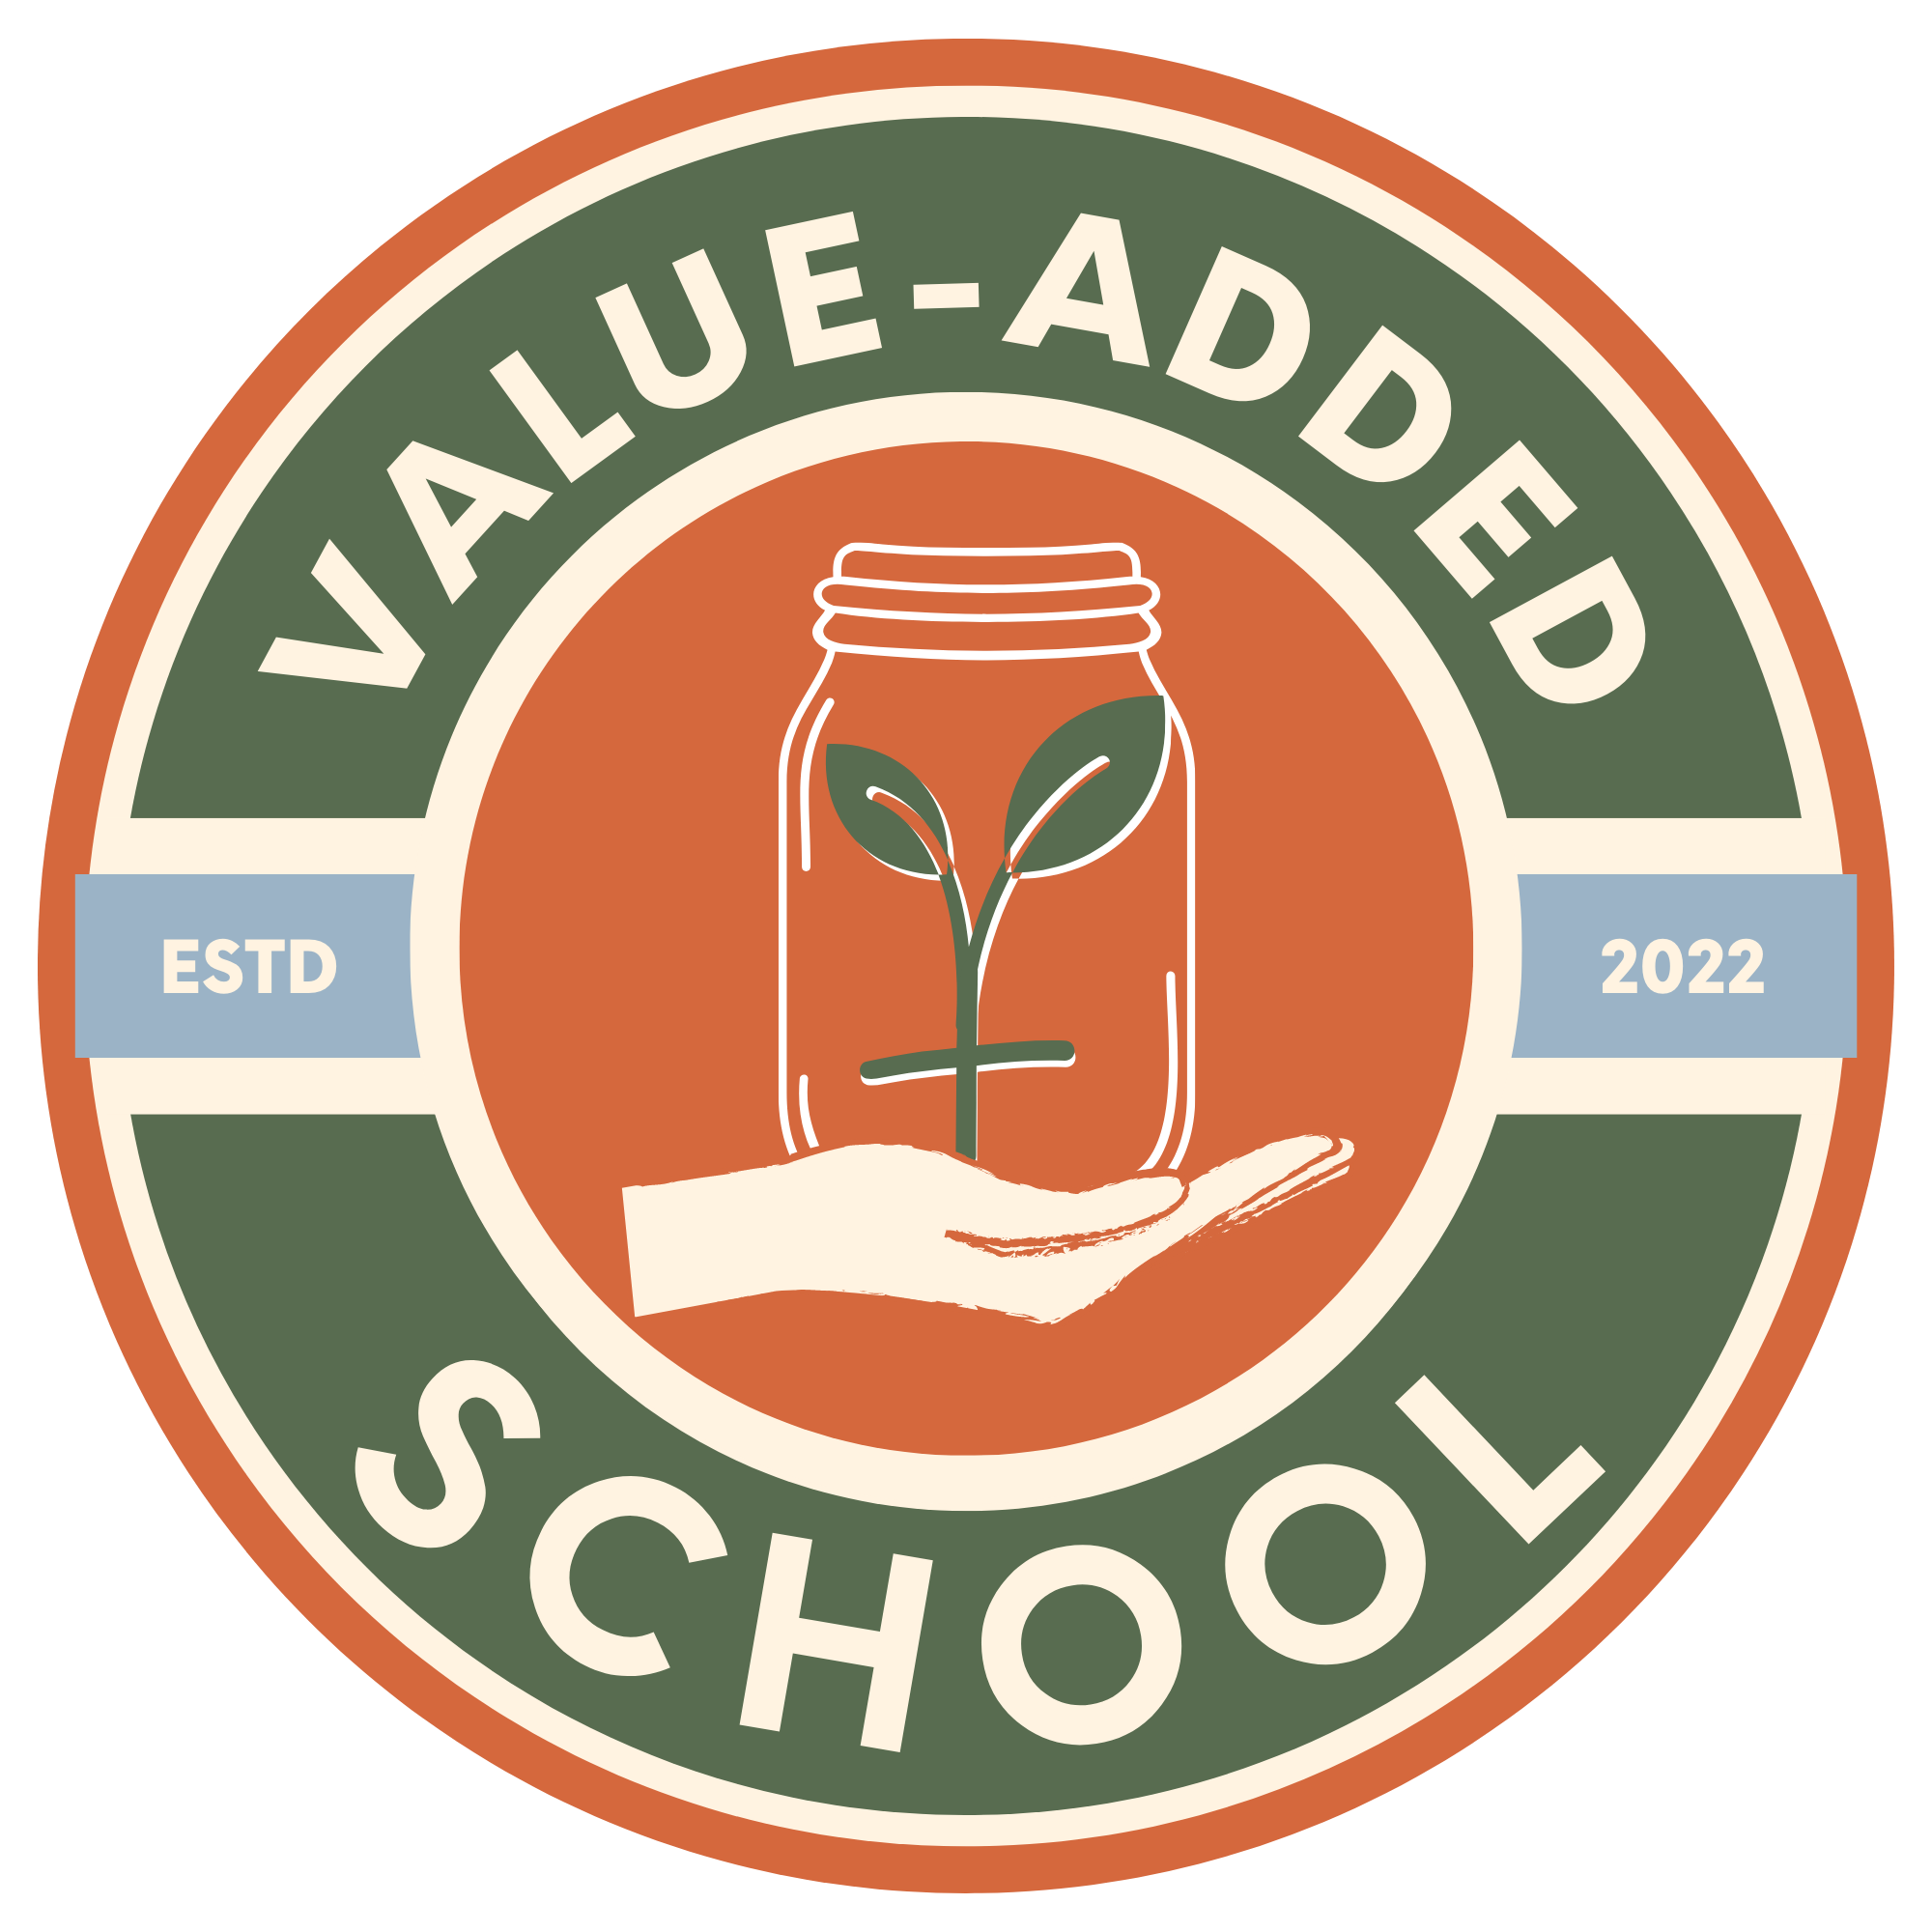 The Value-Added School logo